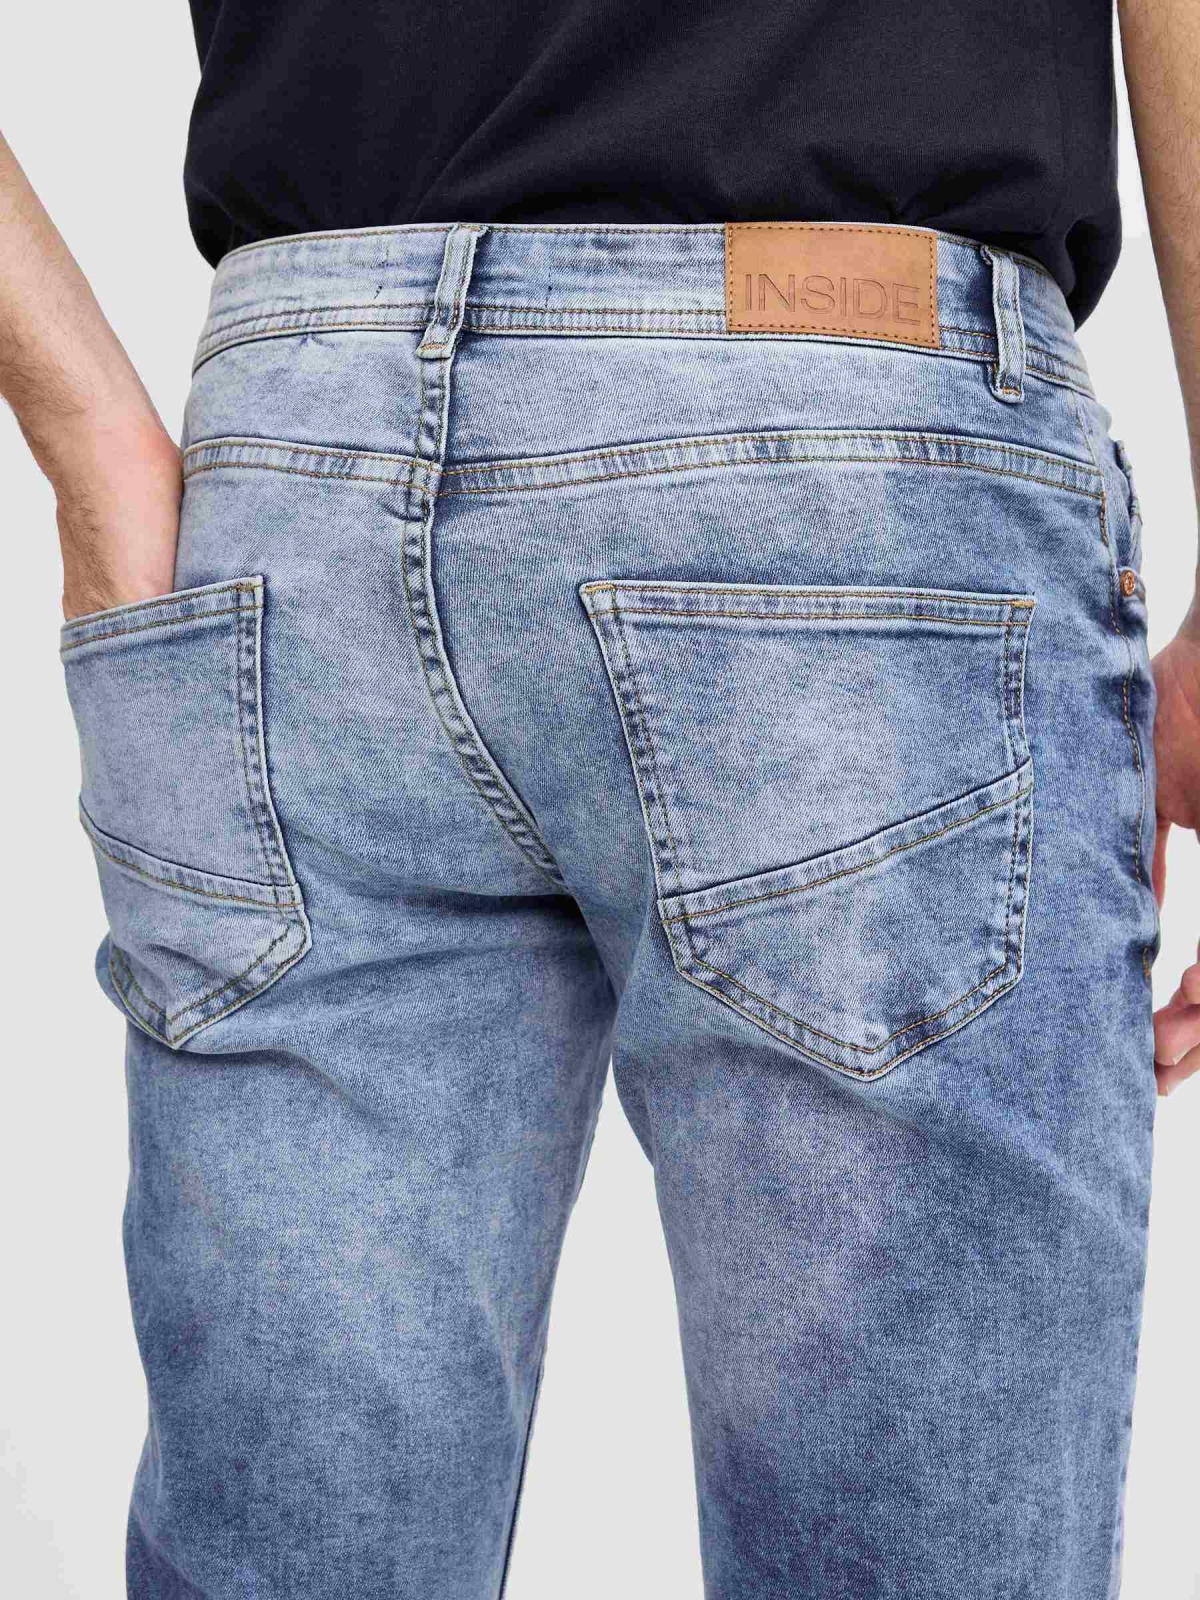 Regular wash jeans blue detail view